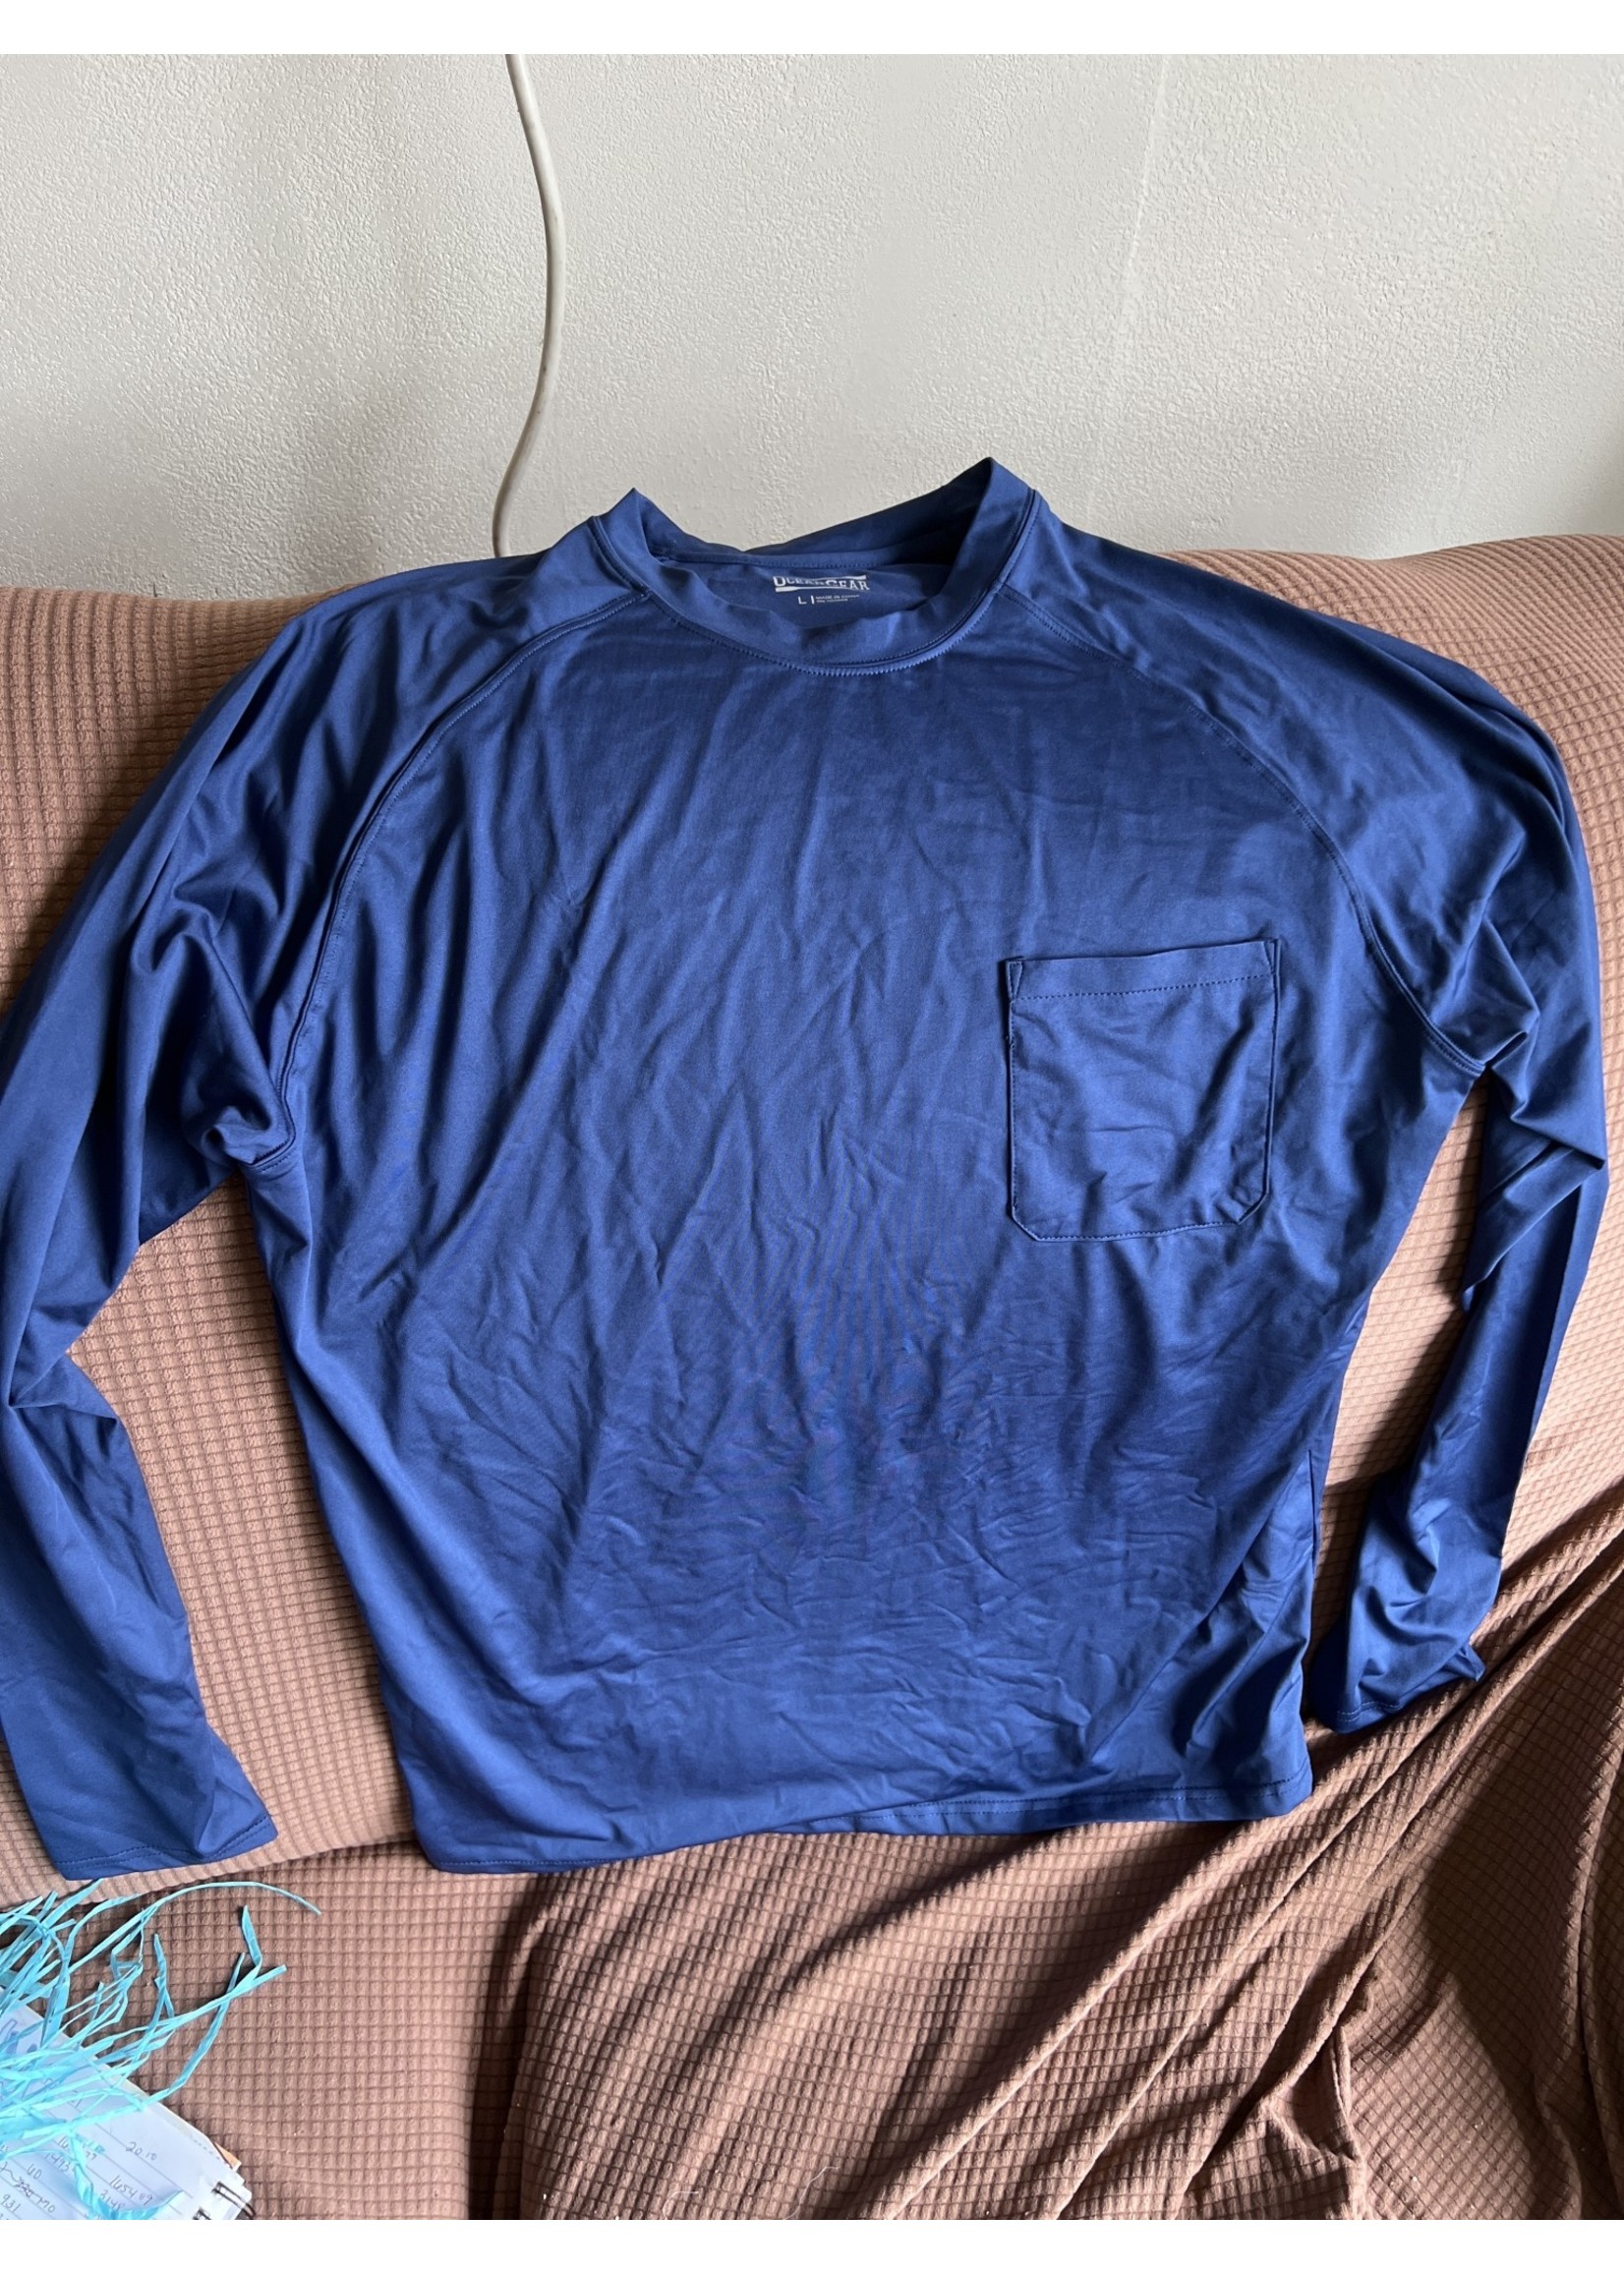 No tags- Ocean Gear - Blue long Sleeve w/ pocket shirt L